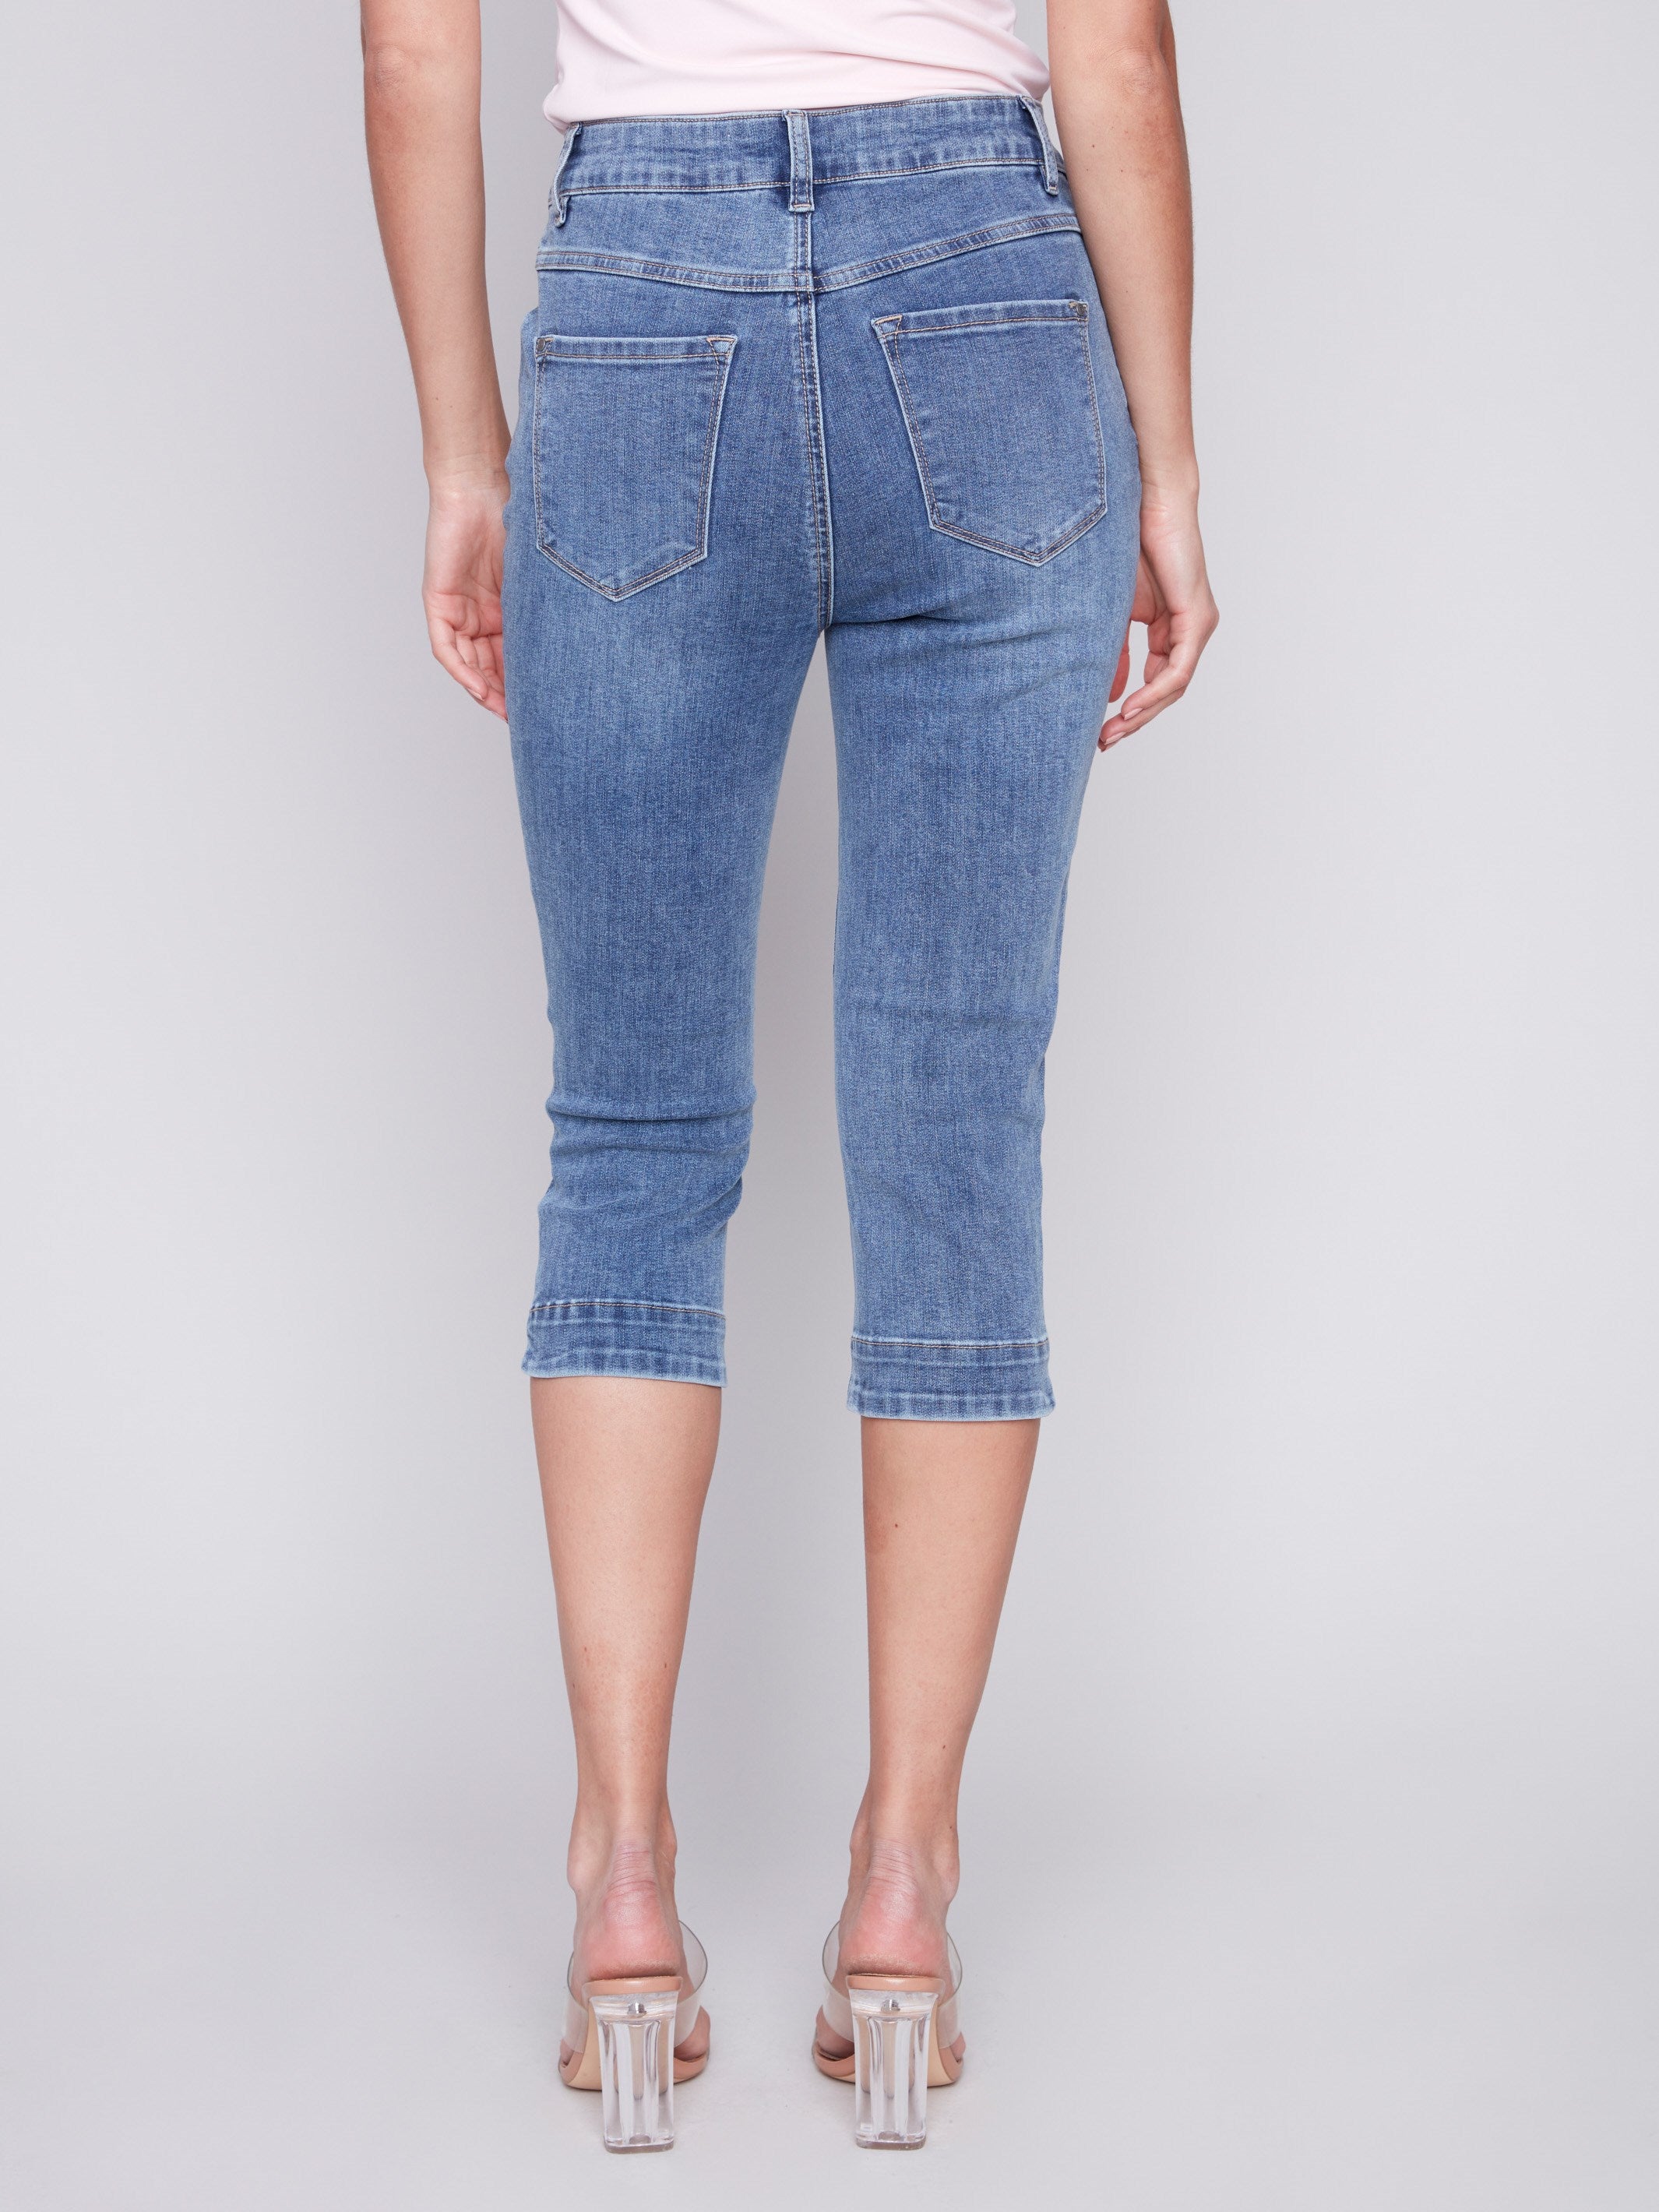 Knee High Capri Jeans - Medium Blue - Charlie B Collection Canada - Image 3